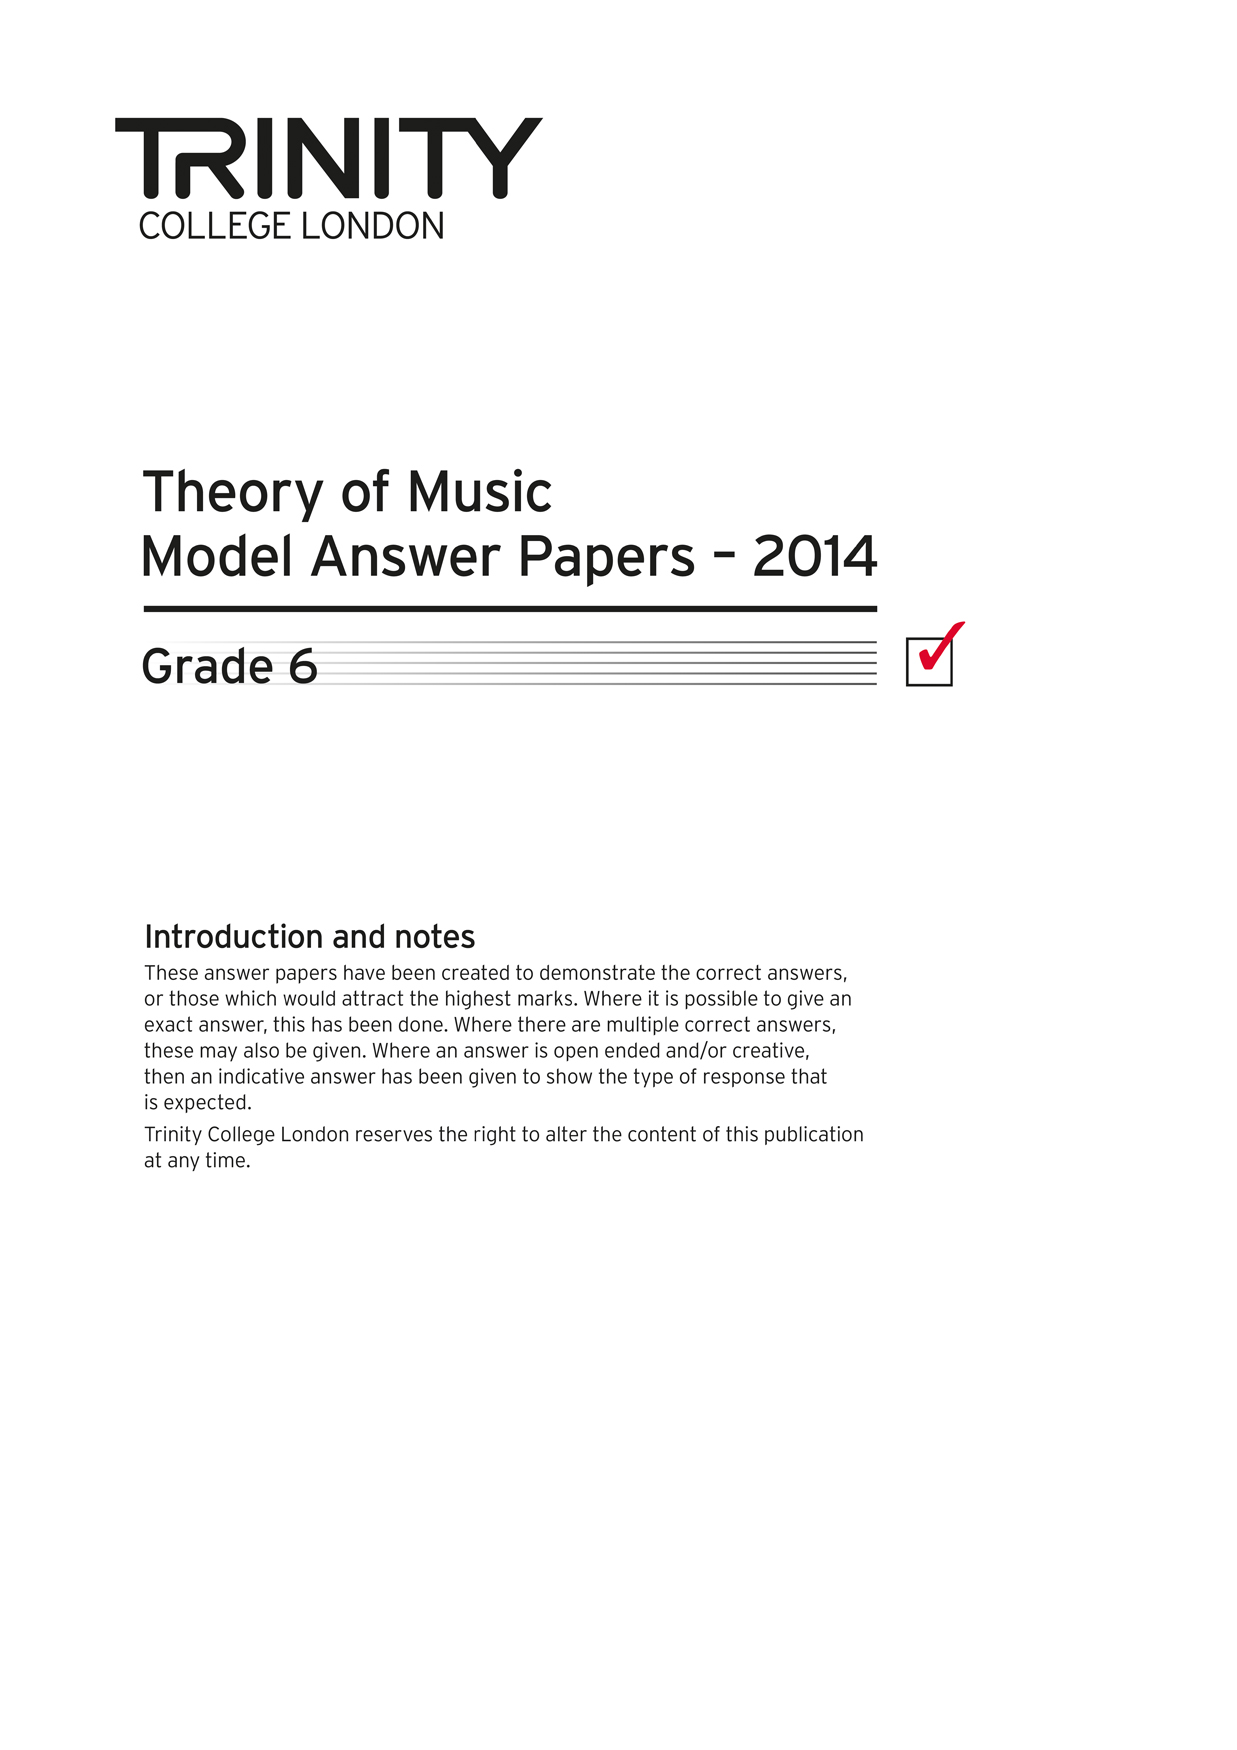 Theory Model Answers 2014 - Grade 6: Theory